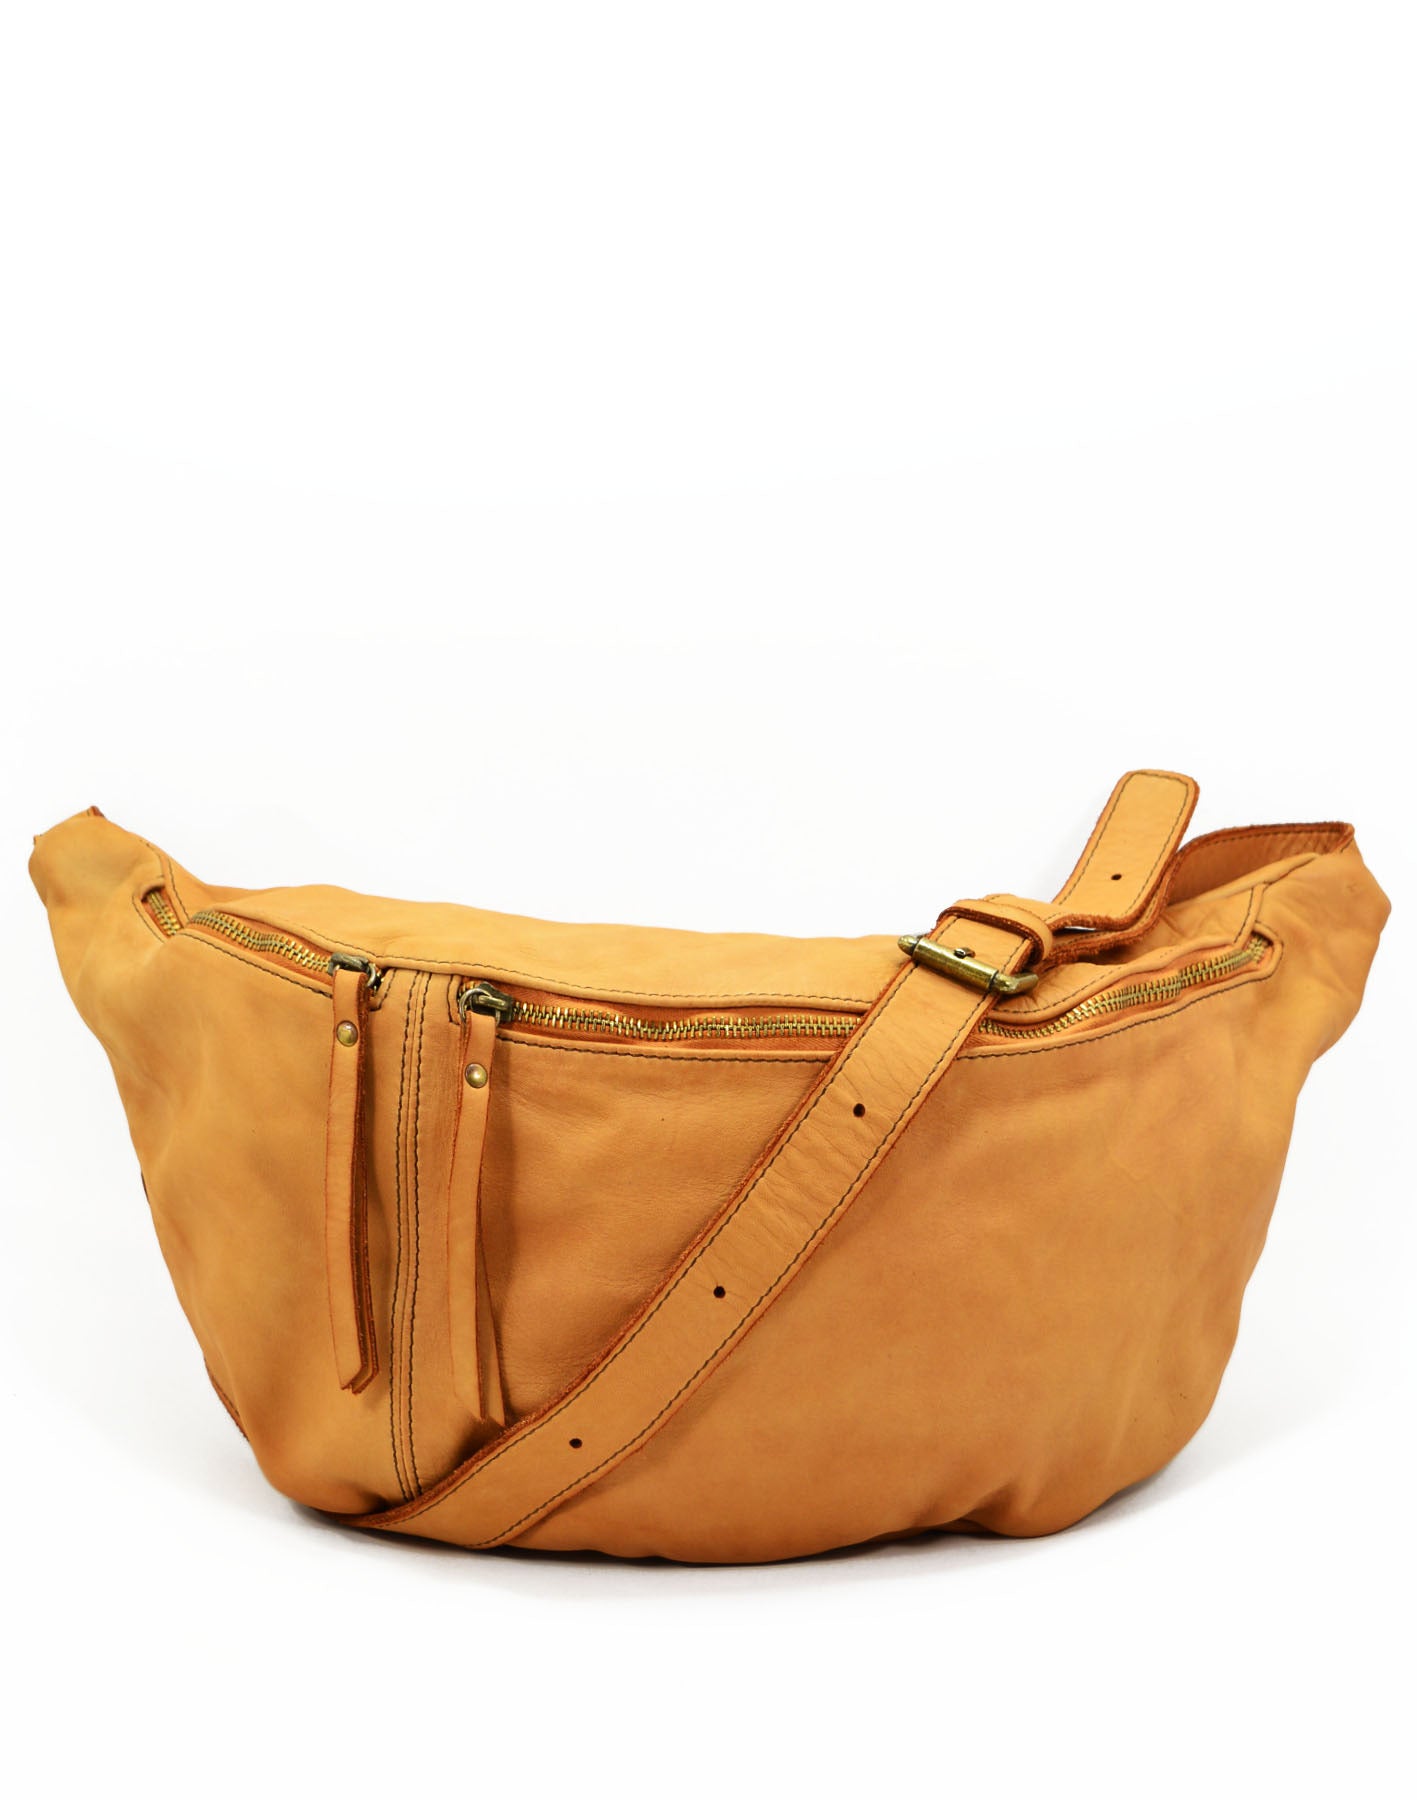 Italian Leather Bags, Handmade Leather Goods